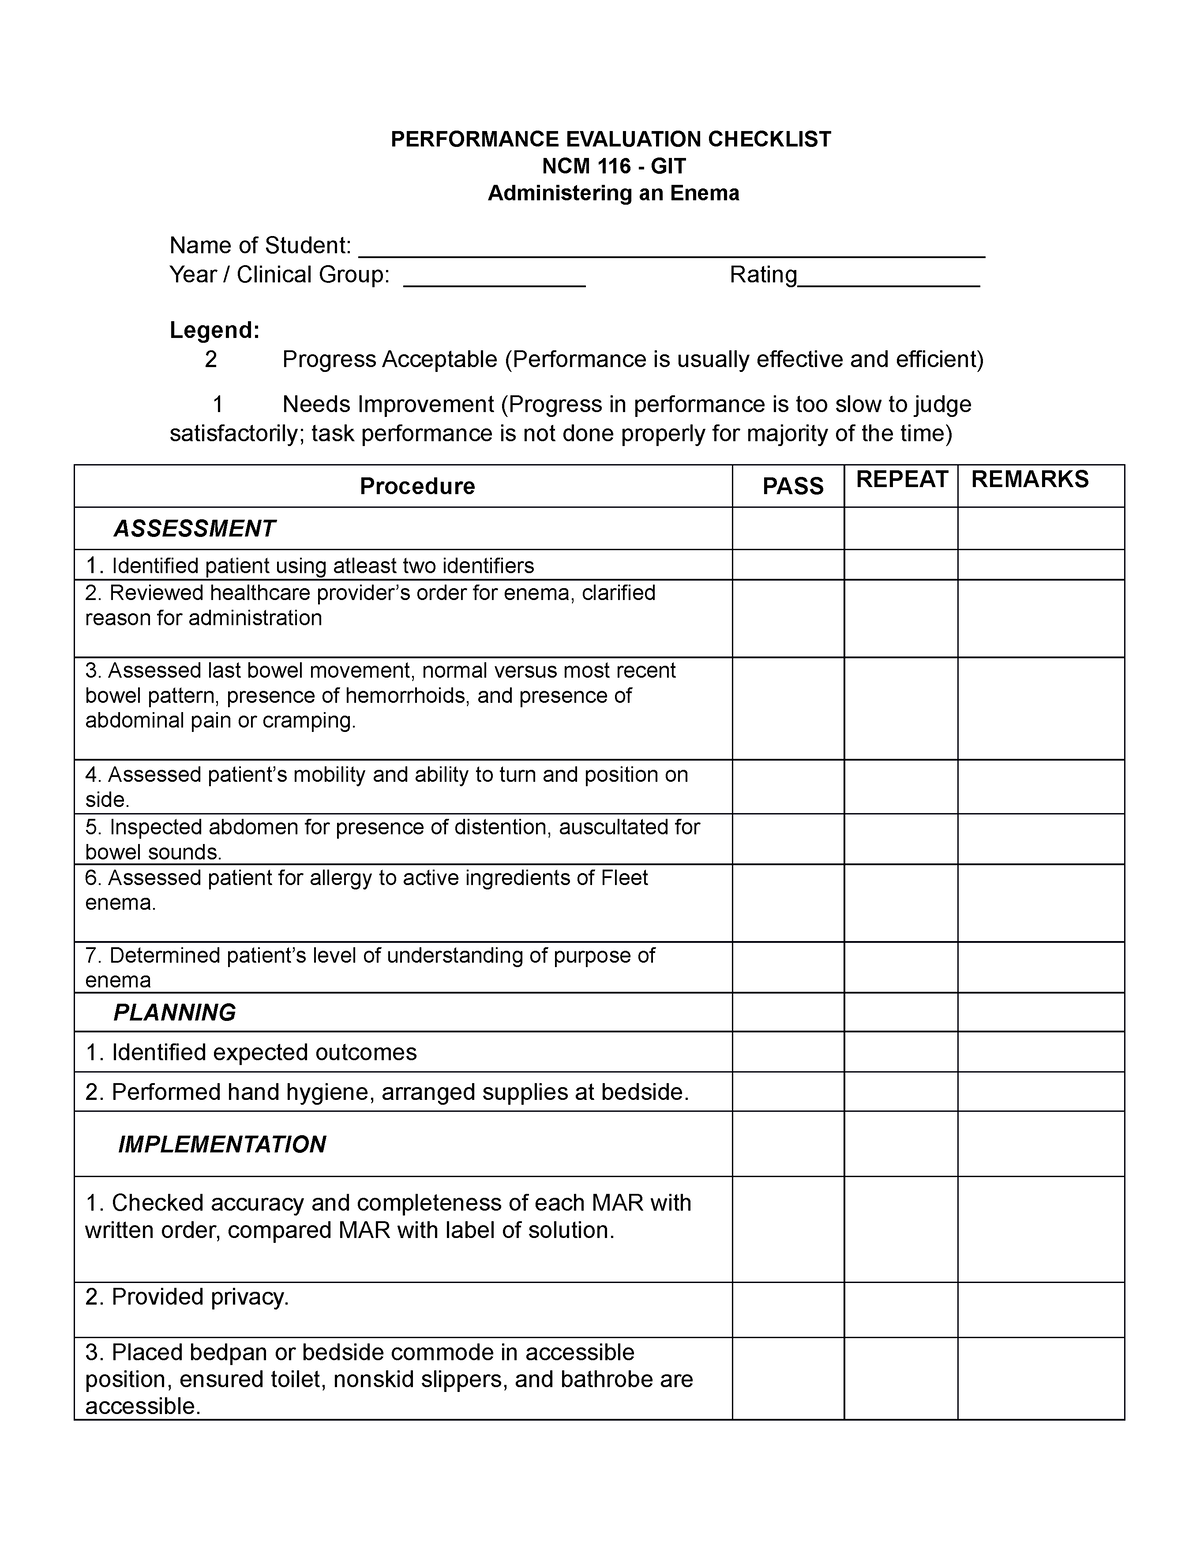 Administering An Enema Checklist PERFORMANCE EVALUATION CHECKLIST NCM